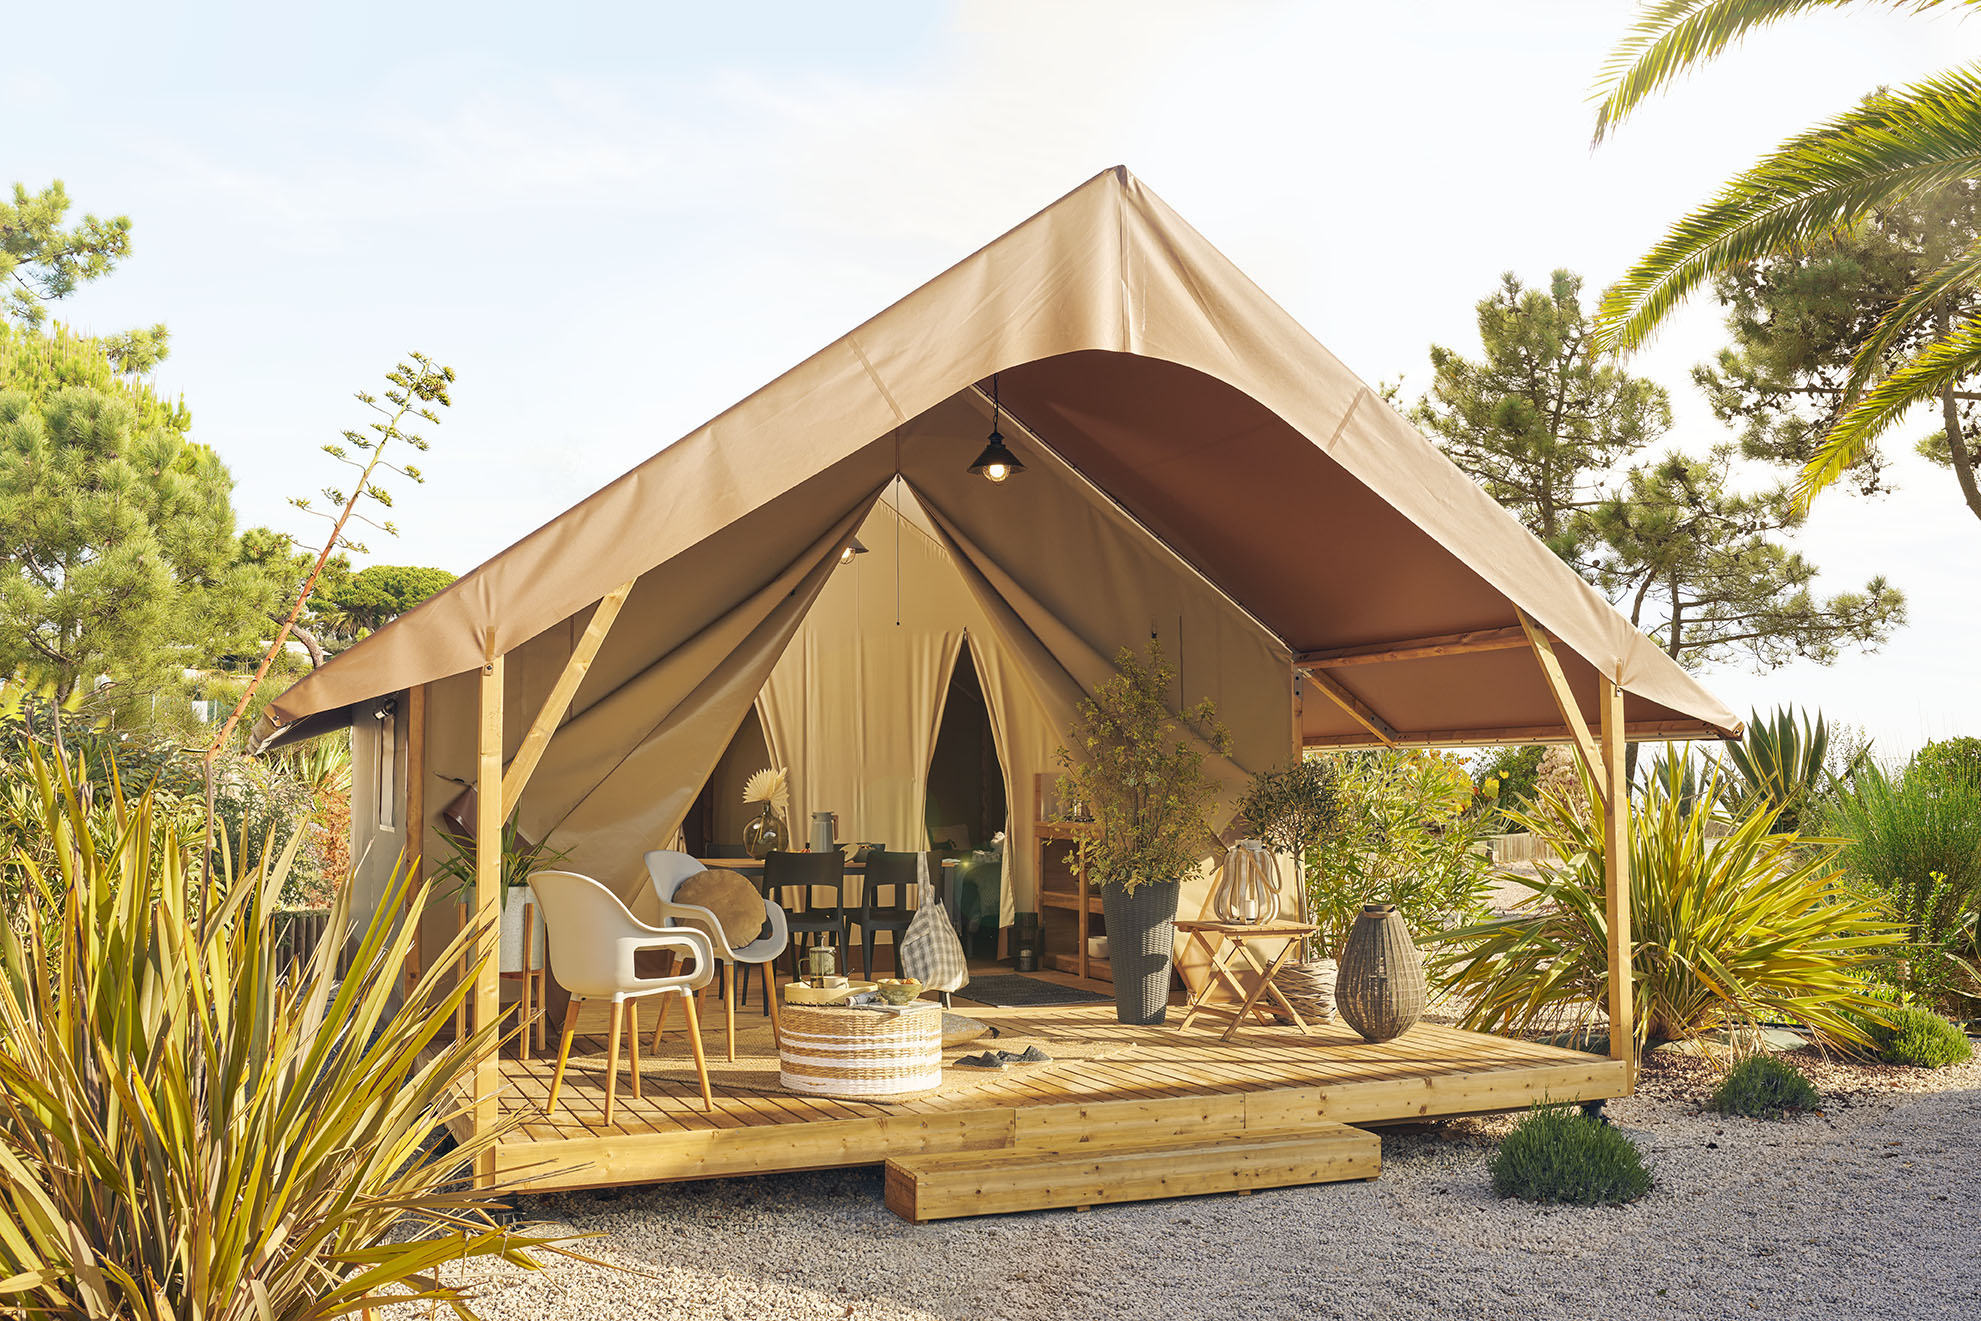 Aparte accommodaties : Tente Wood